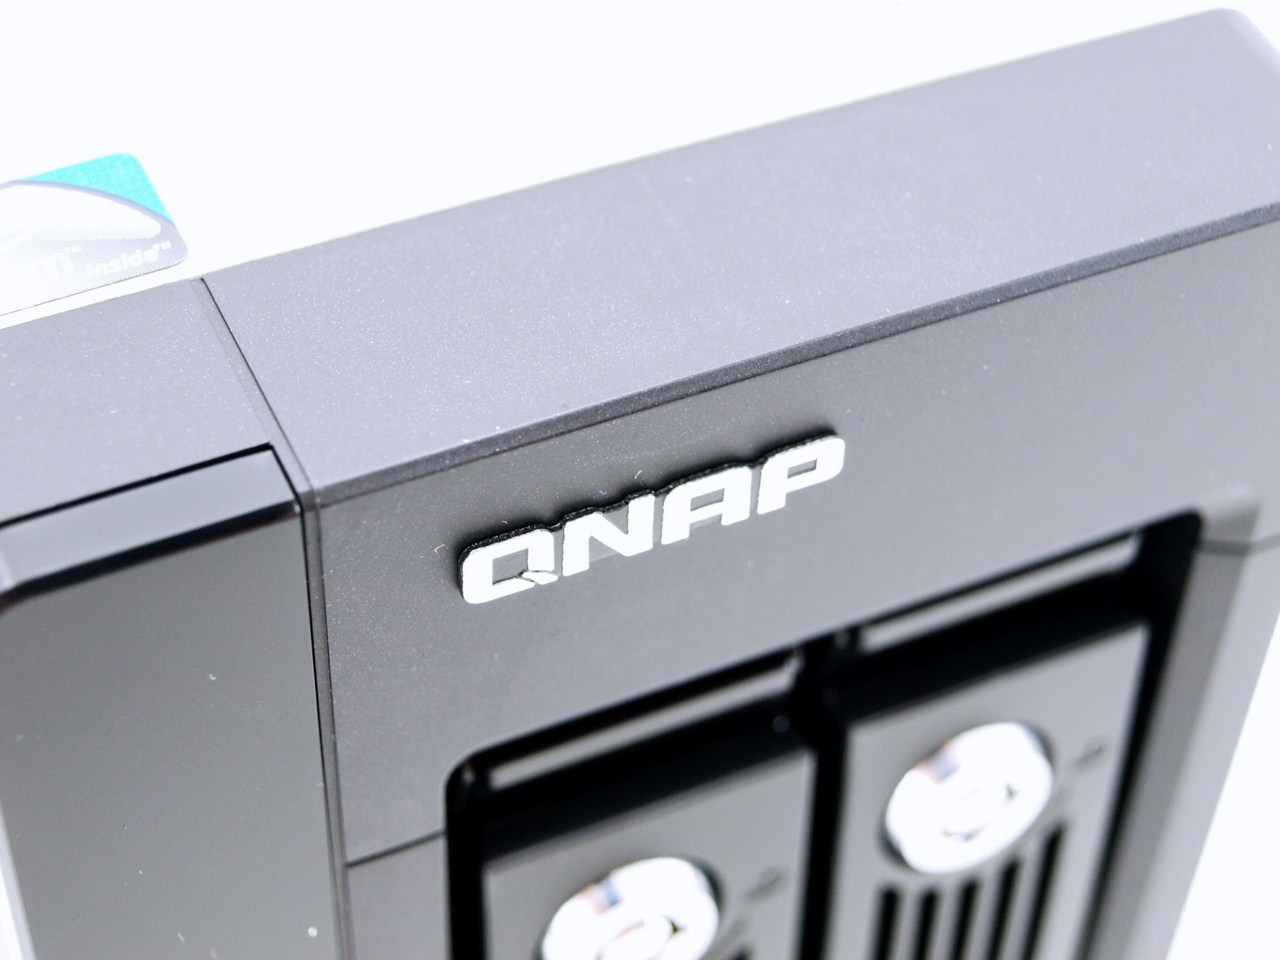 QNAP TurboNAS TS-259 Pro+ NAS Server Review